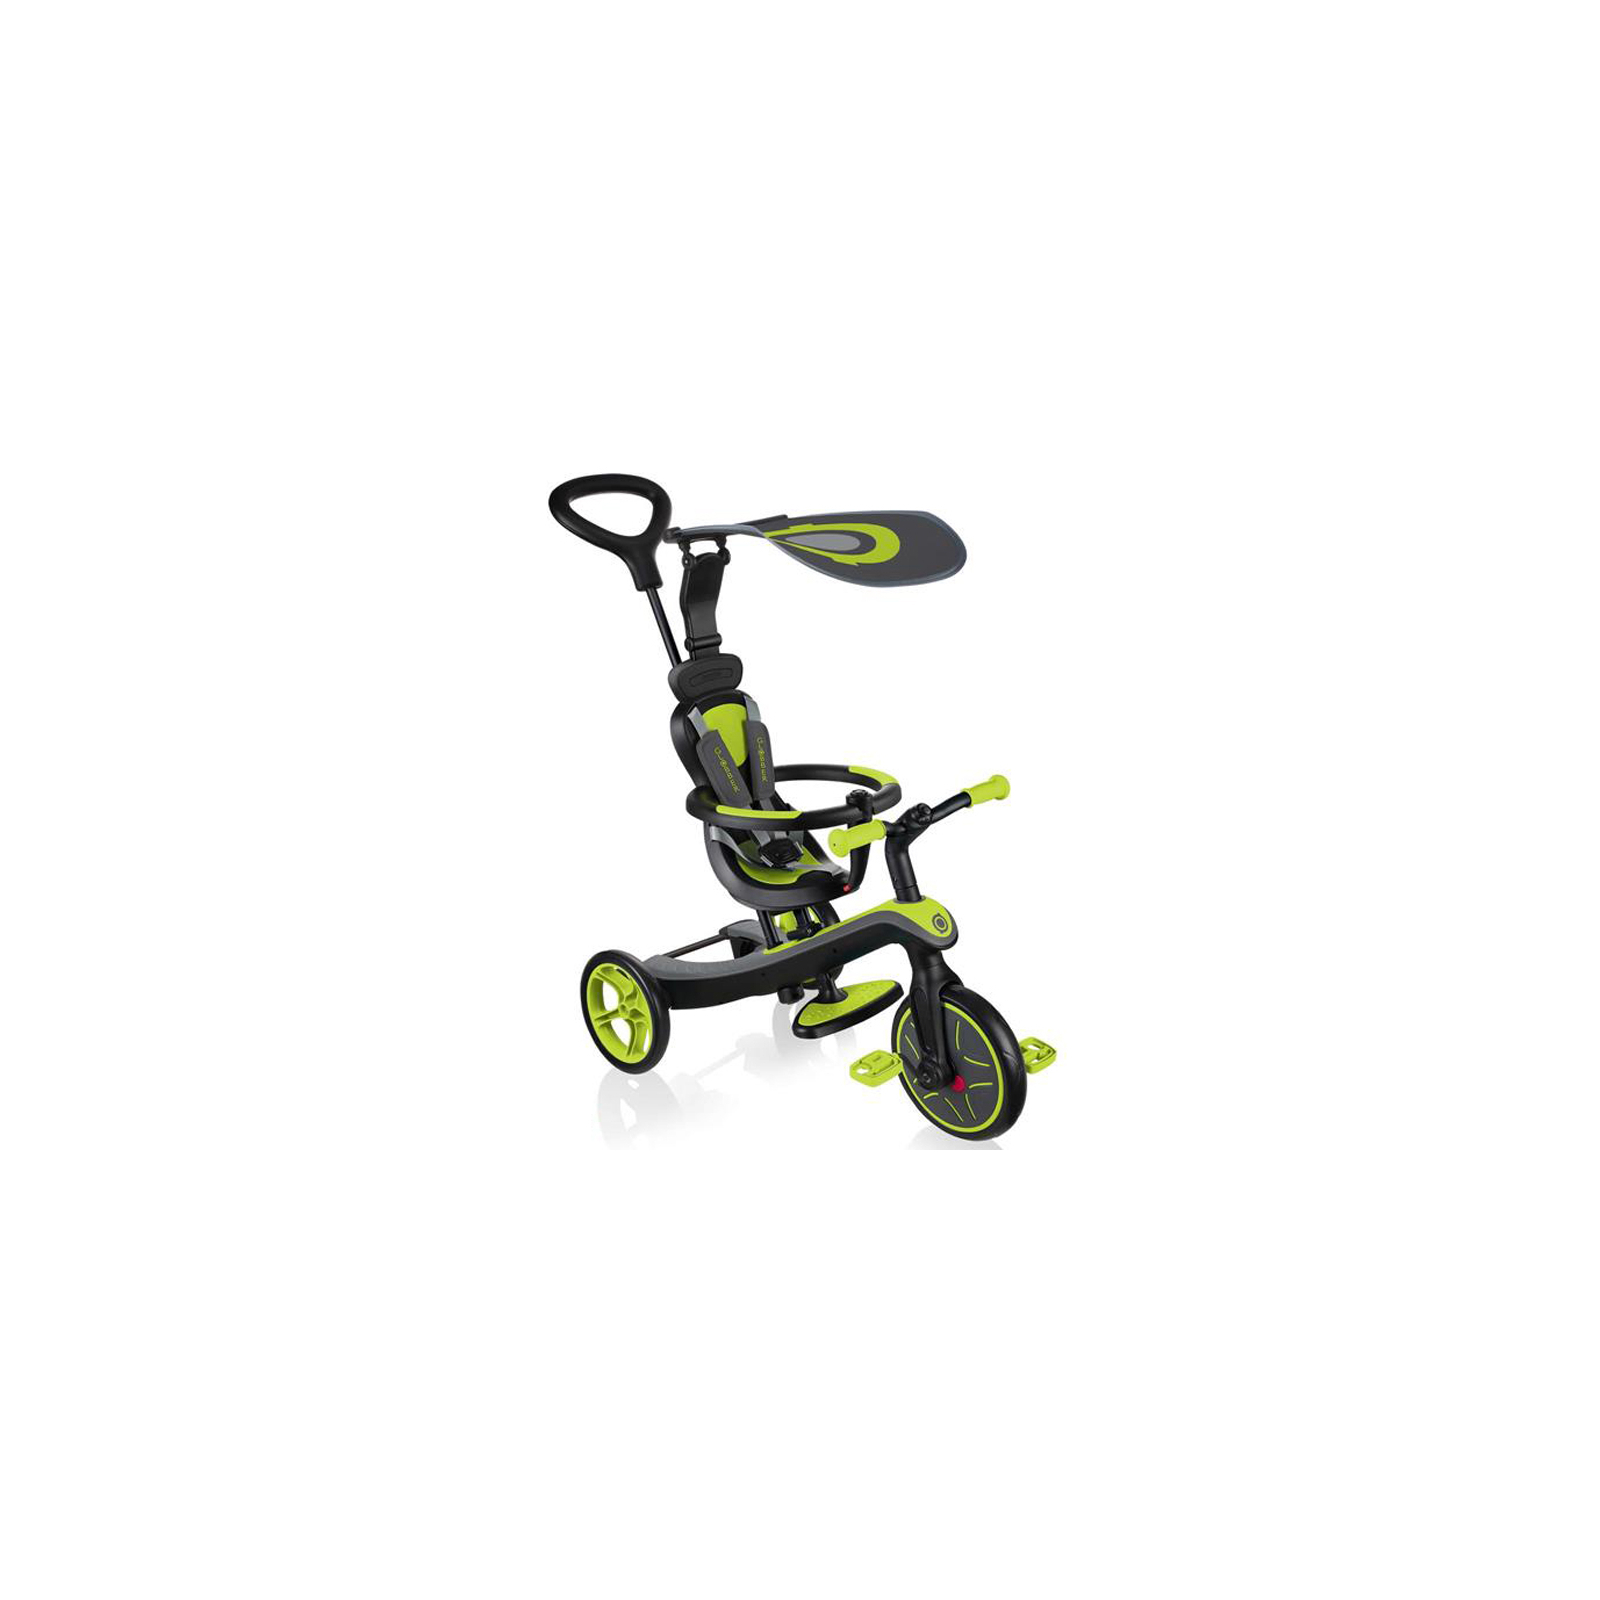 Дитячий велосипед Globber 4 в 1 Explorer Trike Lime Green (632-106-3)